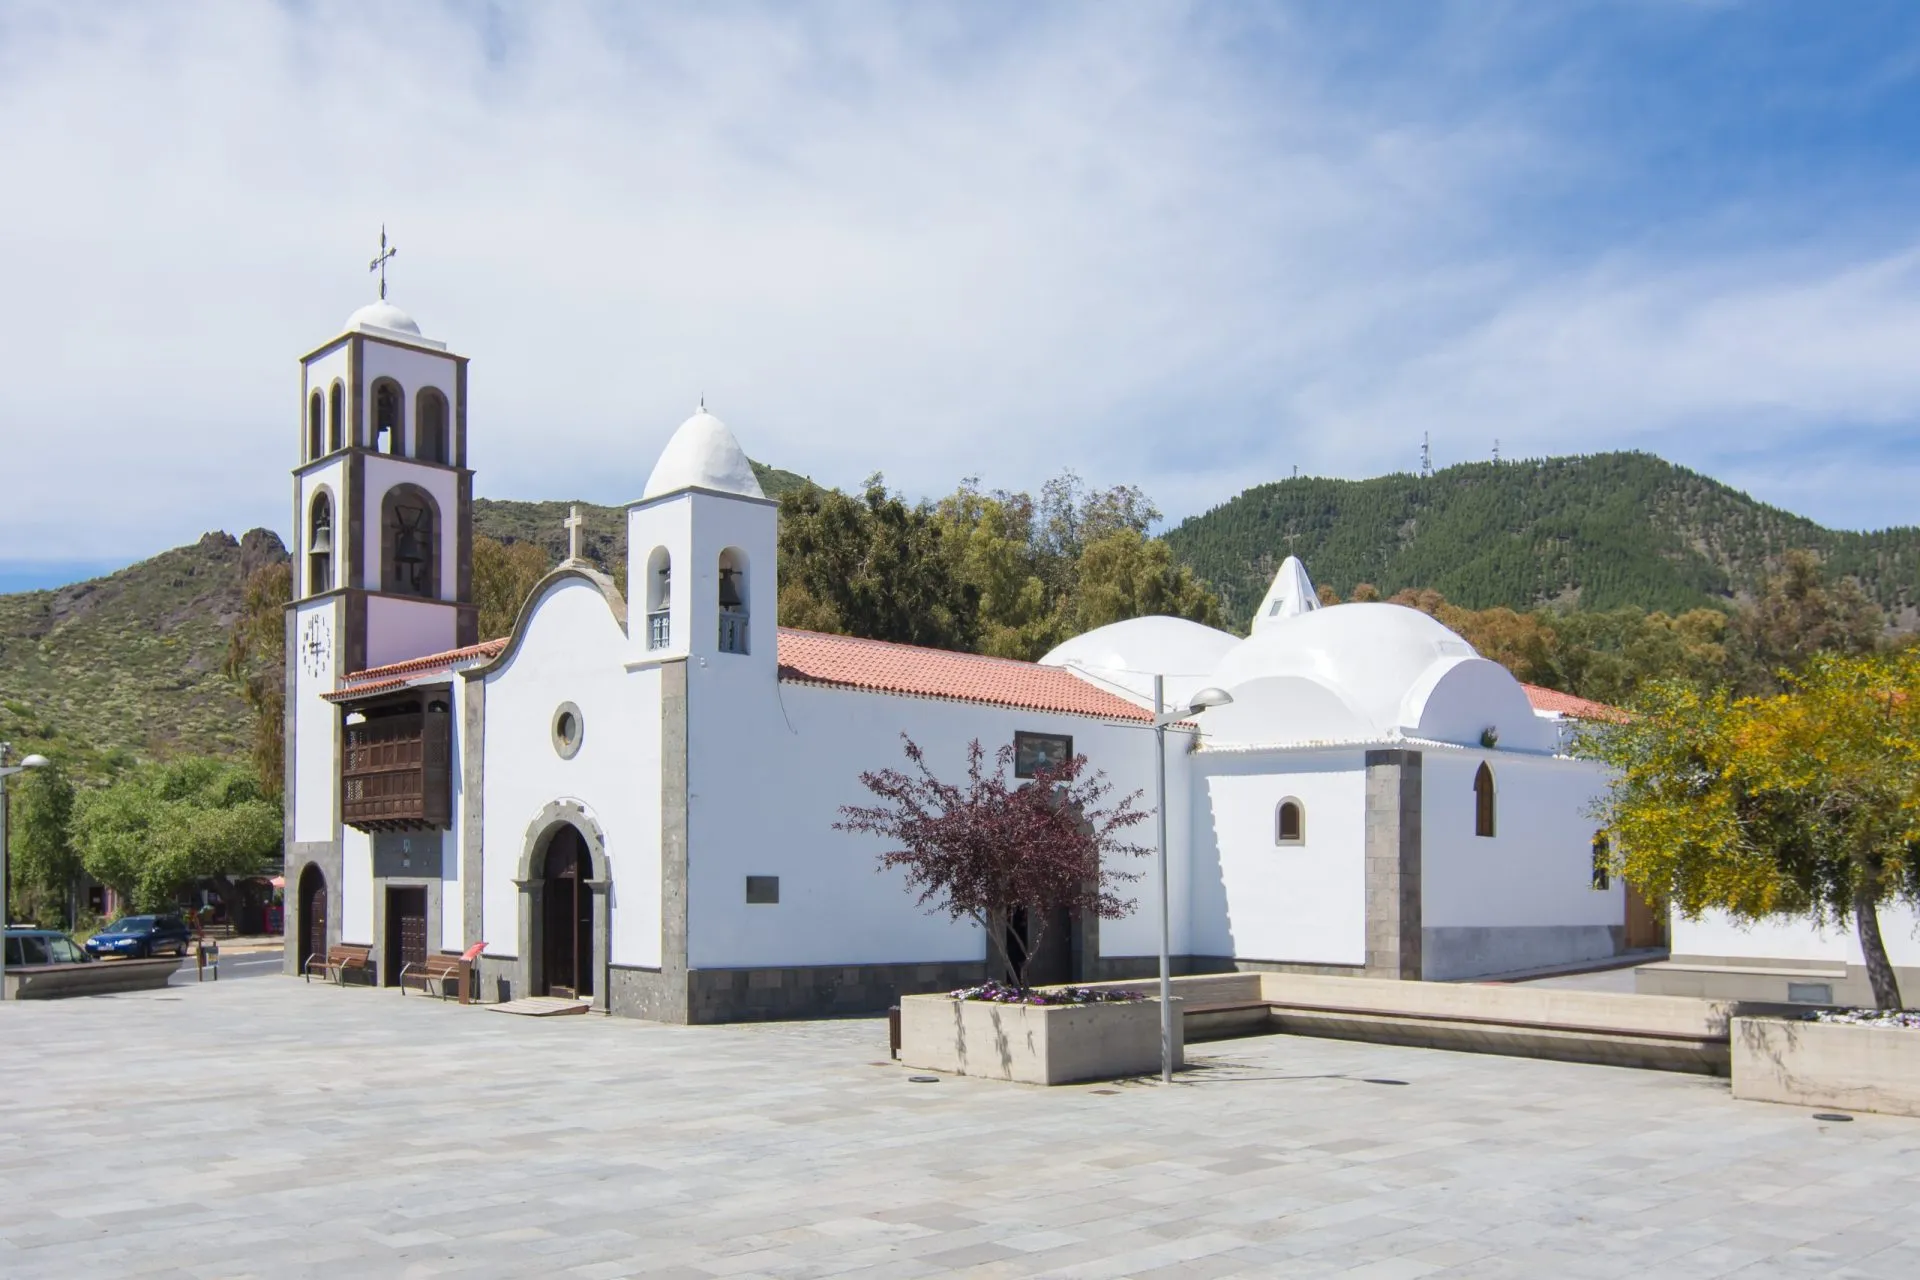 Iglesia (kirke) de San Fernando Rey i Santiago del Teide, Tenerife, Kanariøyene, Spania